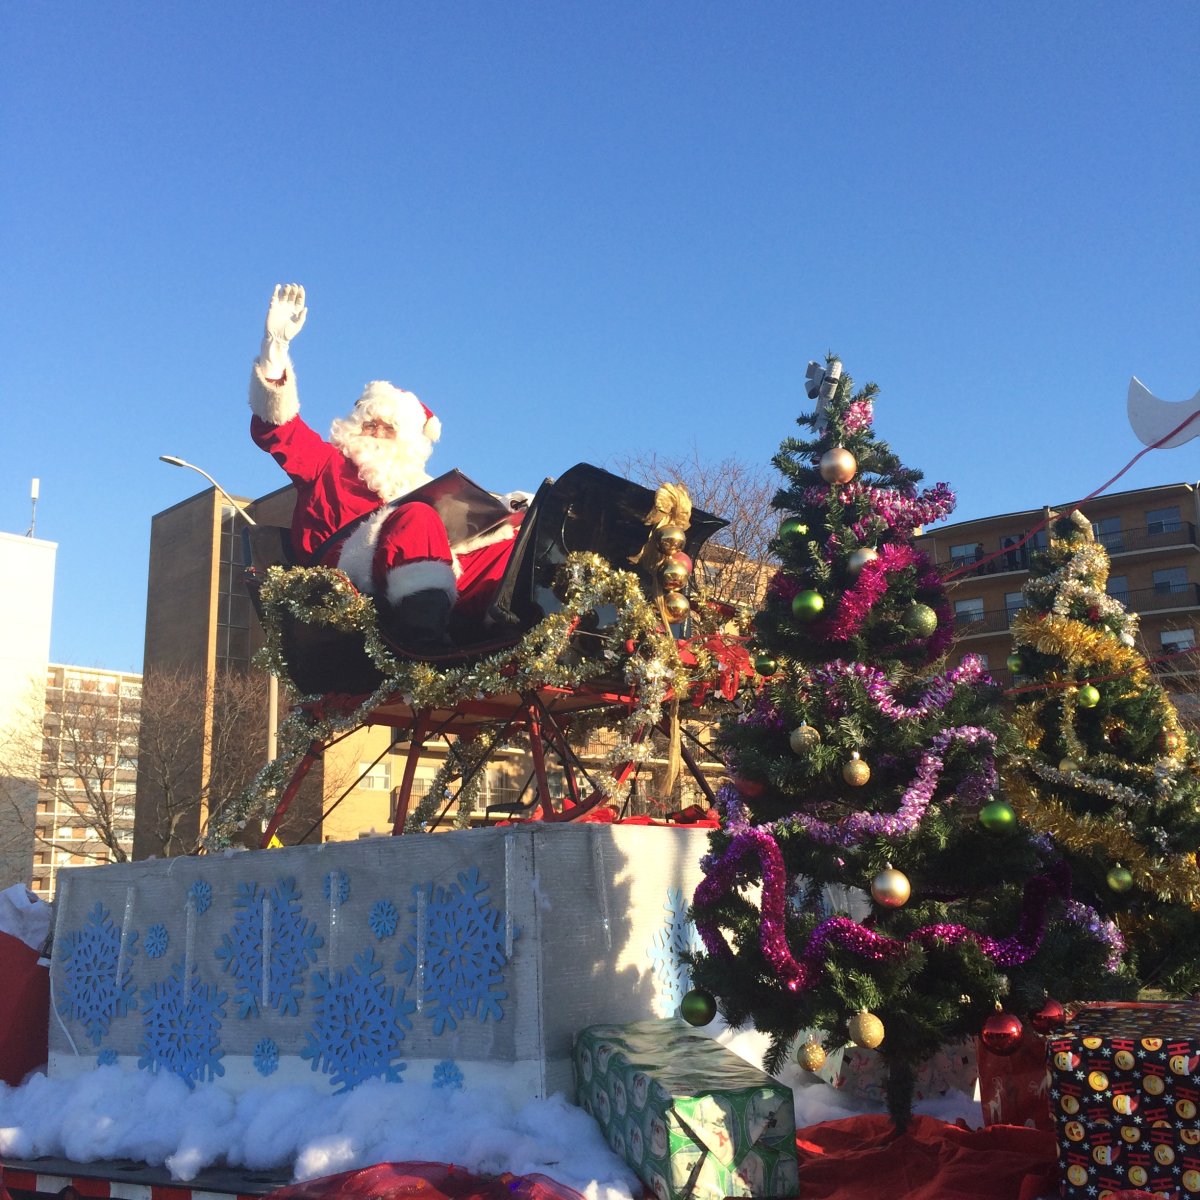 Burlington has announced a COVID safe alternative to its annual Santa Claus parade.